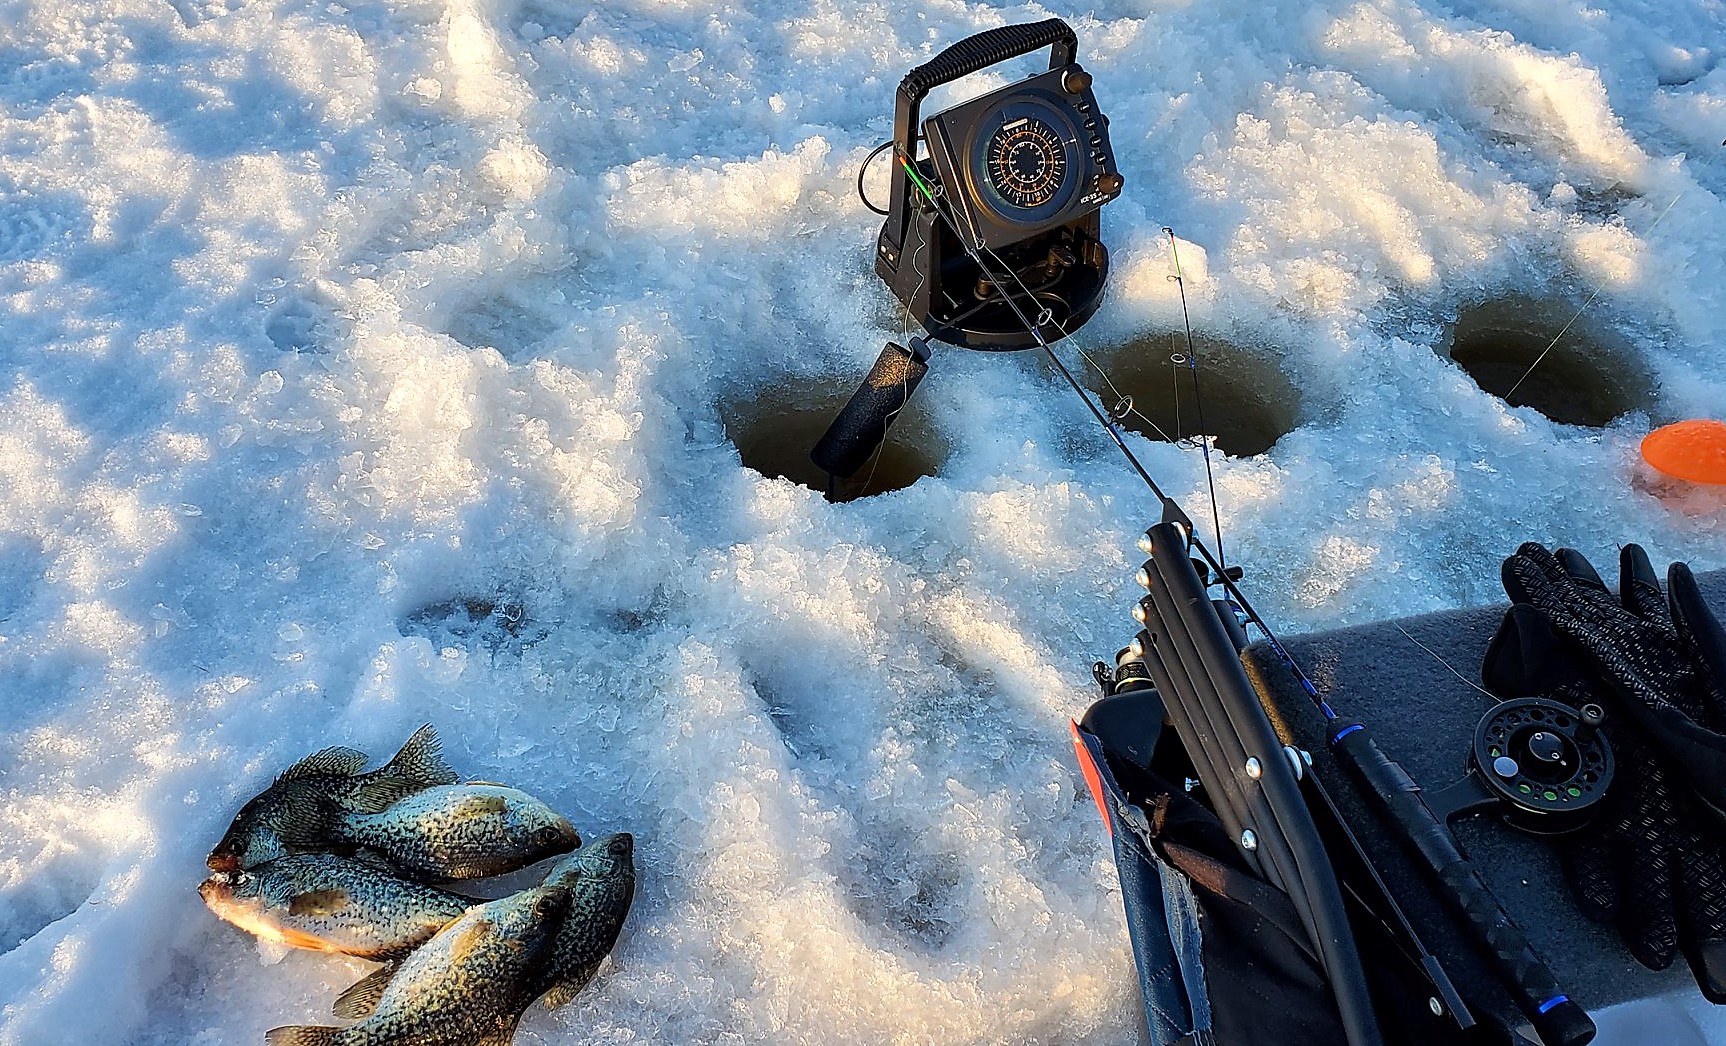 VEXAN® Ice Fishing Tip-Up